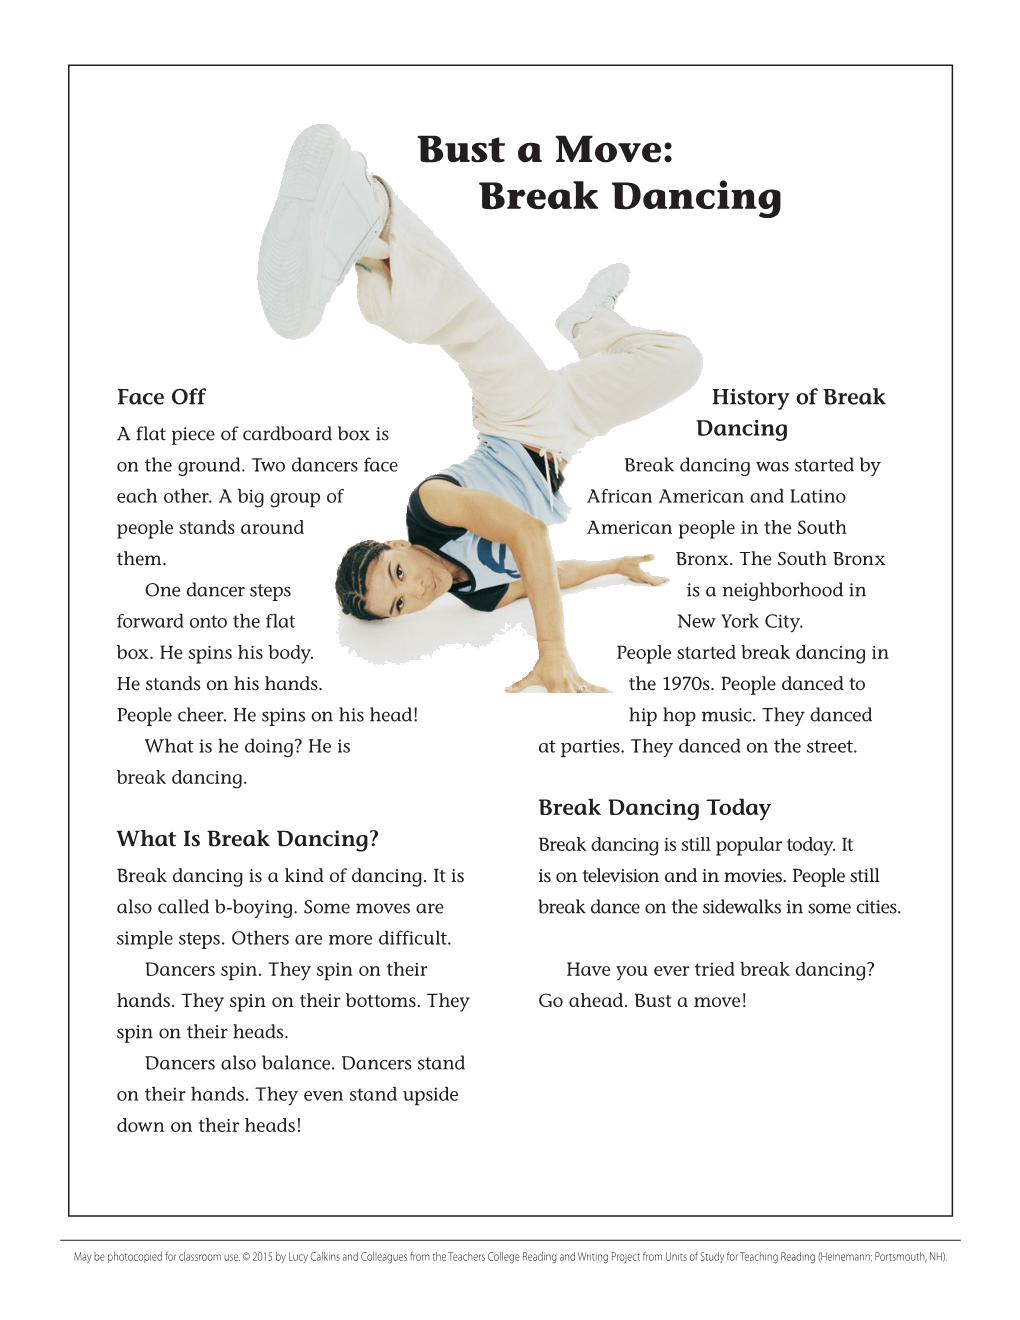 Bust a Move: Break Dancing